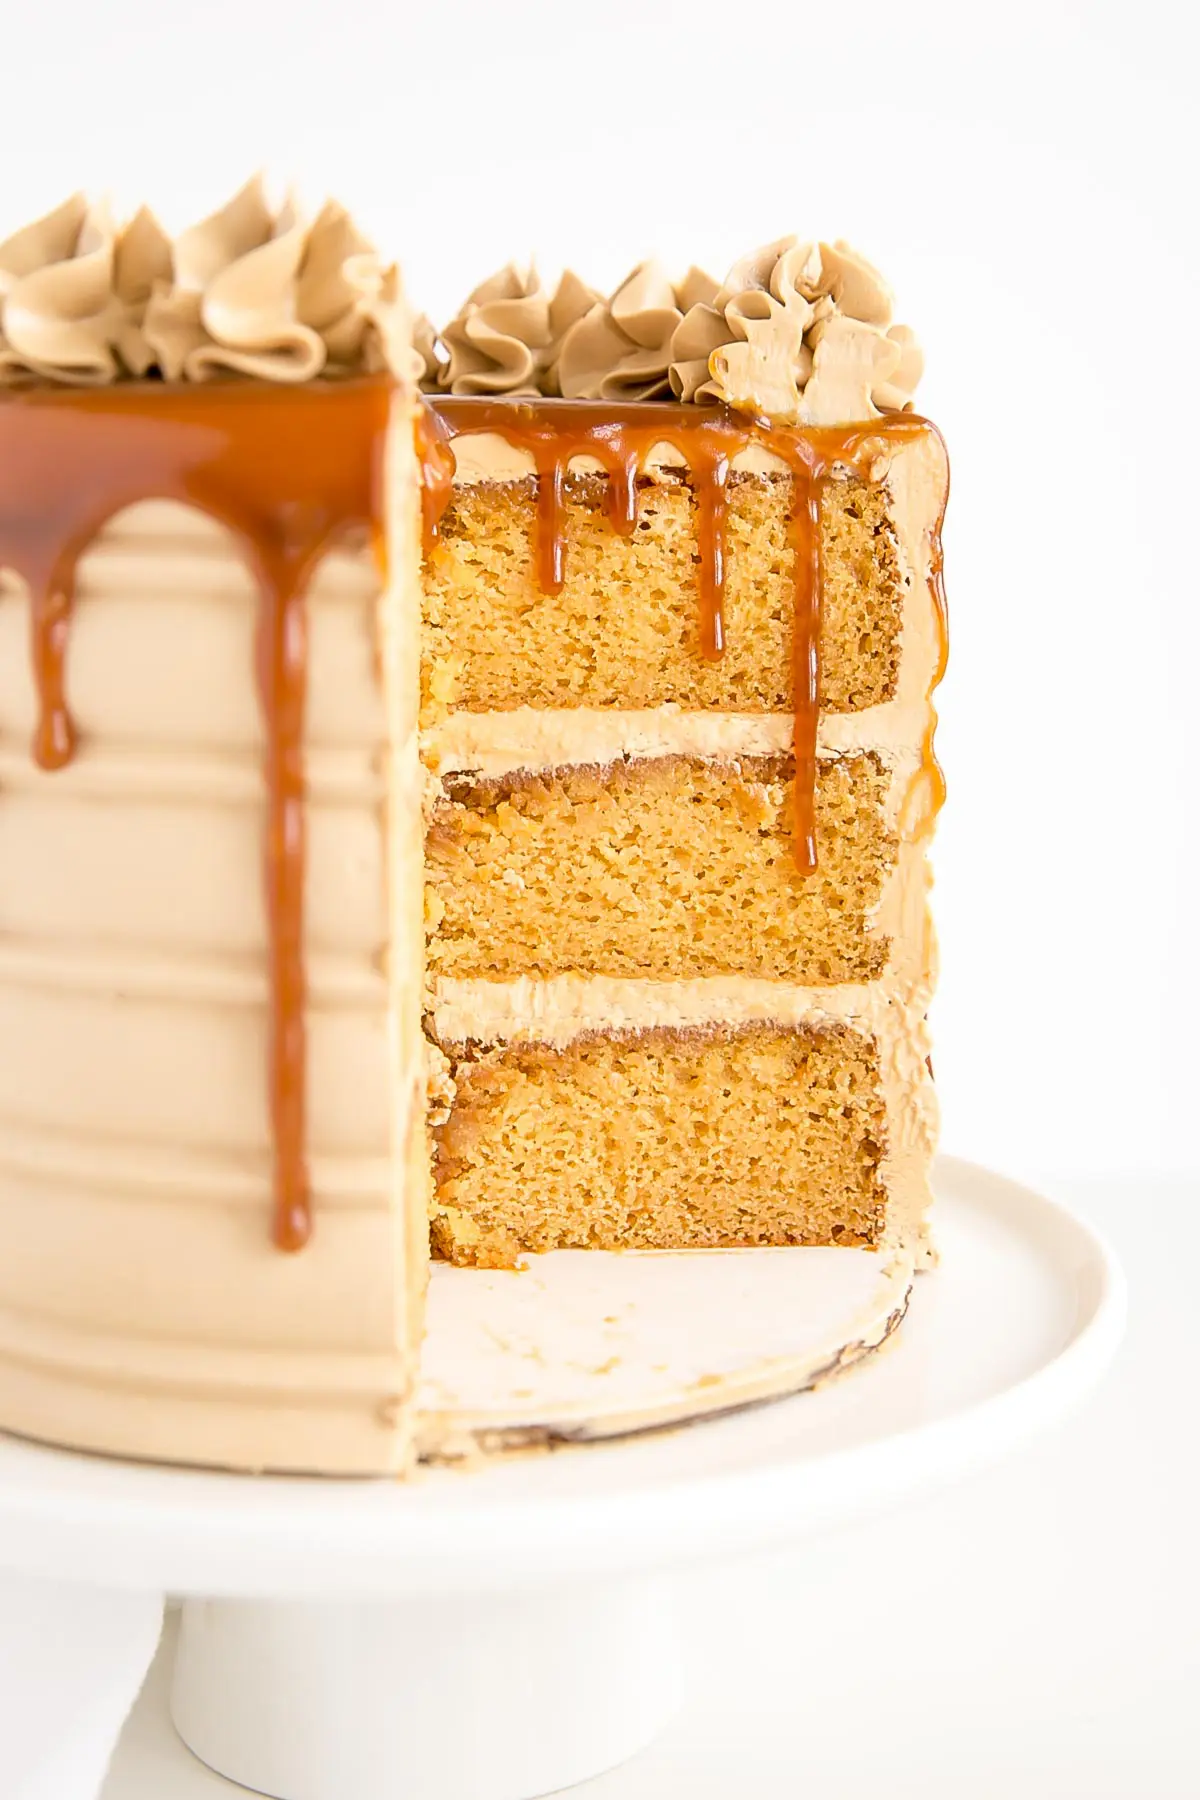 Image result for caramelized vanilla cake